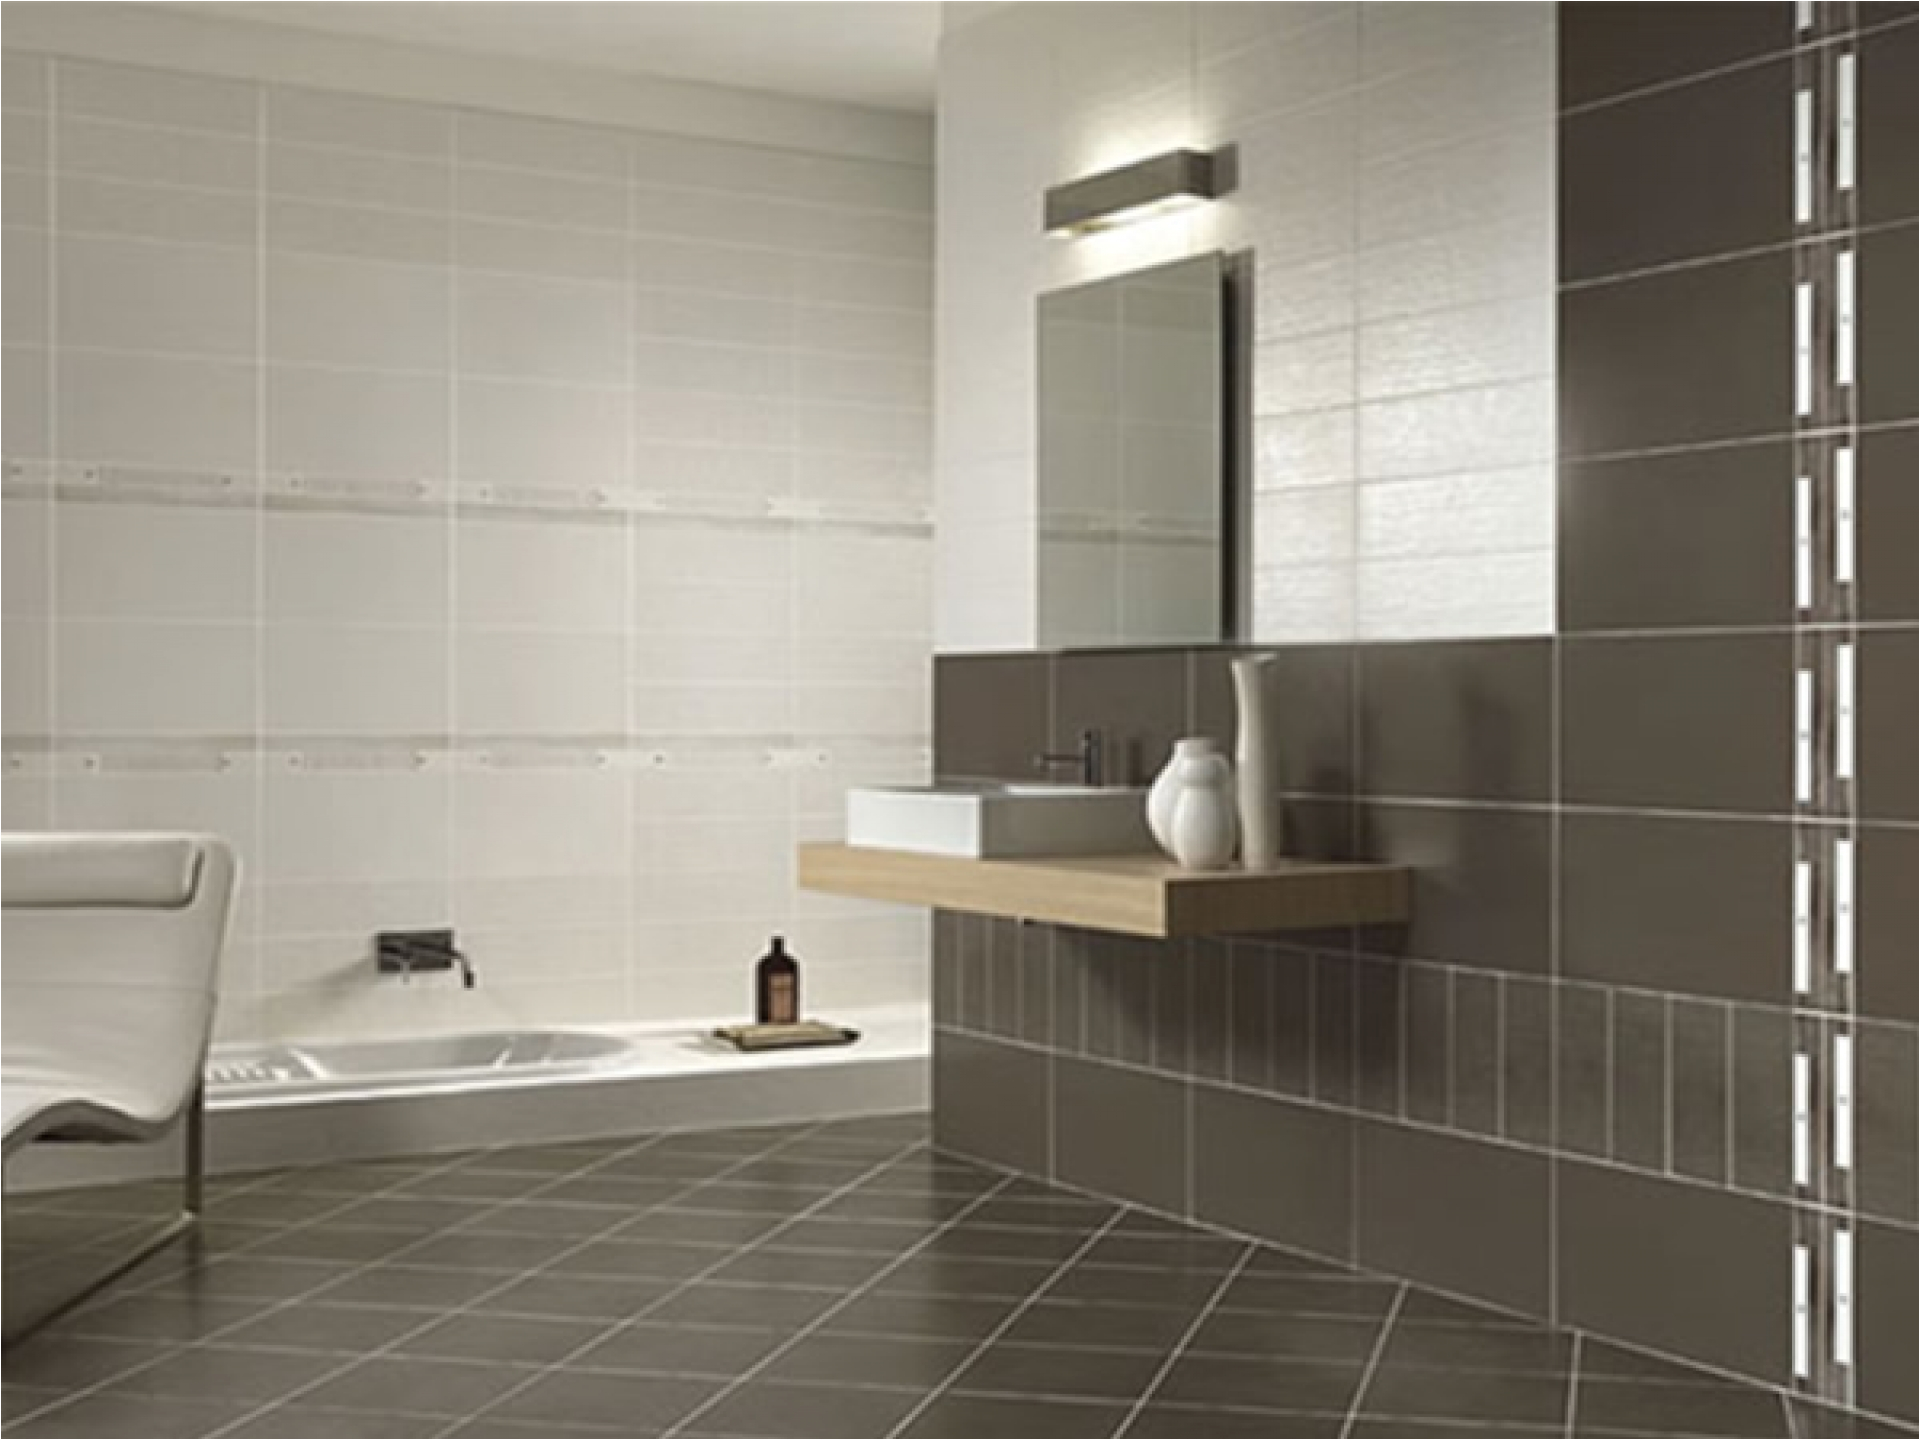 Tiled Bathtubs Ideas 30 Amazing Pictures Decorative Bathroom Tile Designs Ideas